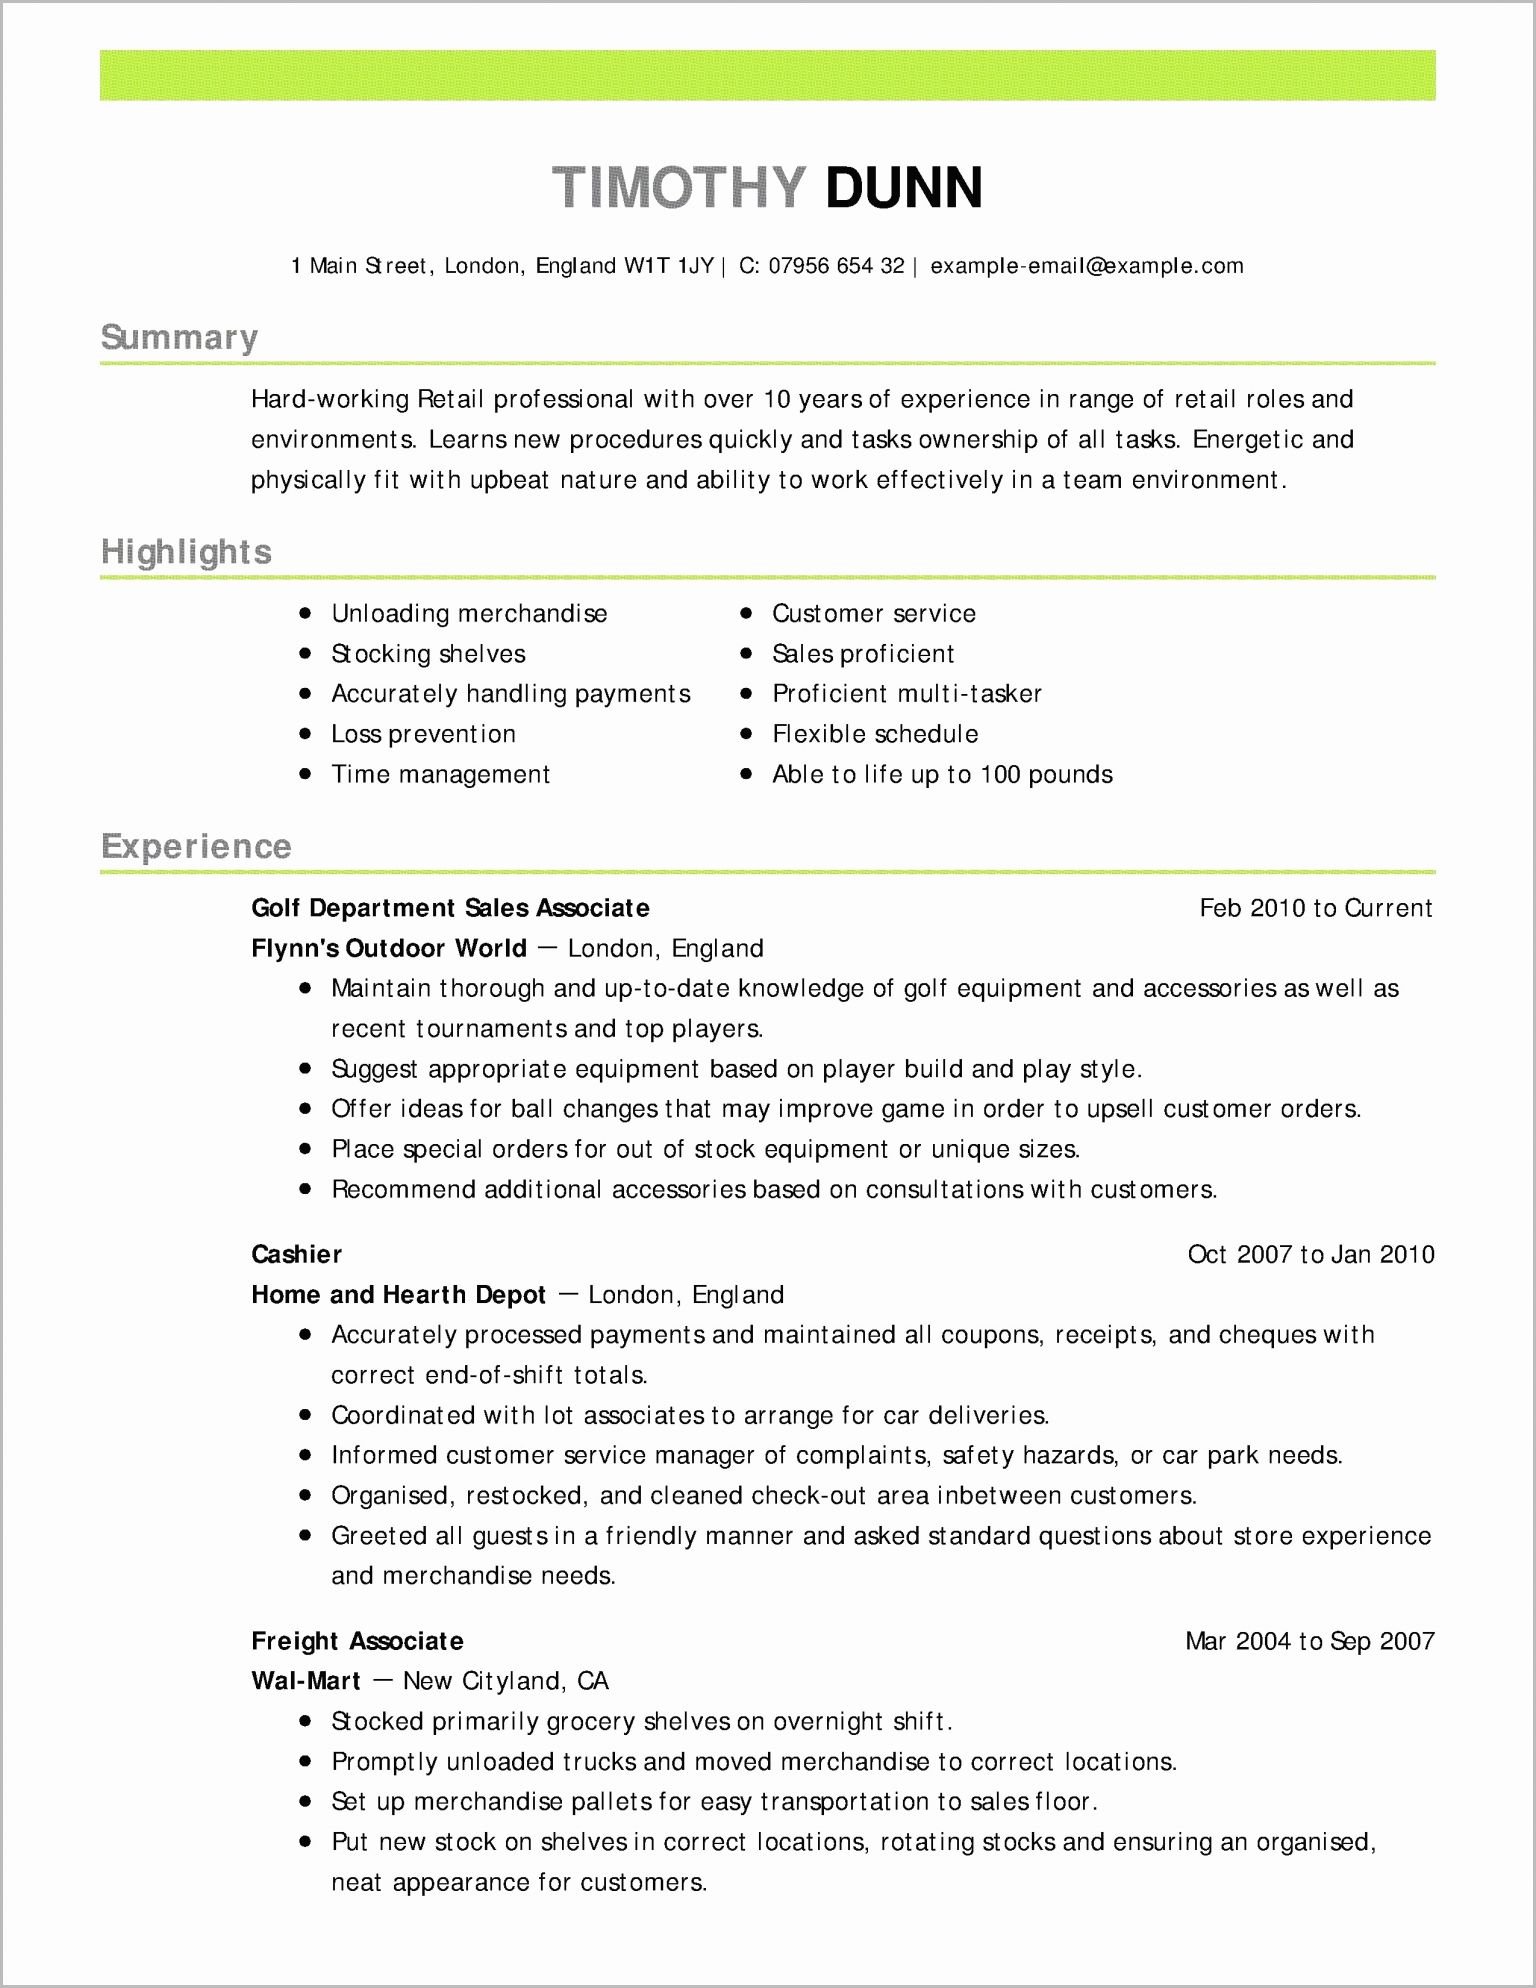 New Sample Resume Objectives Career Change 1536x1988 